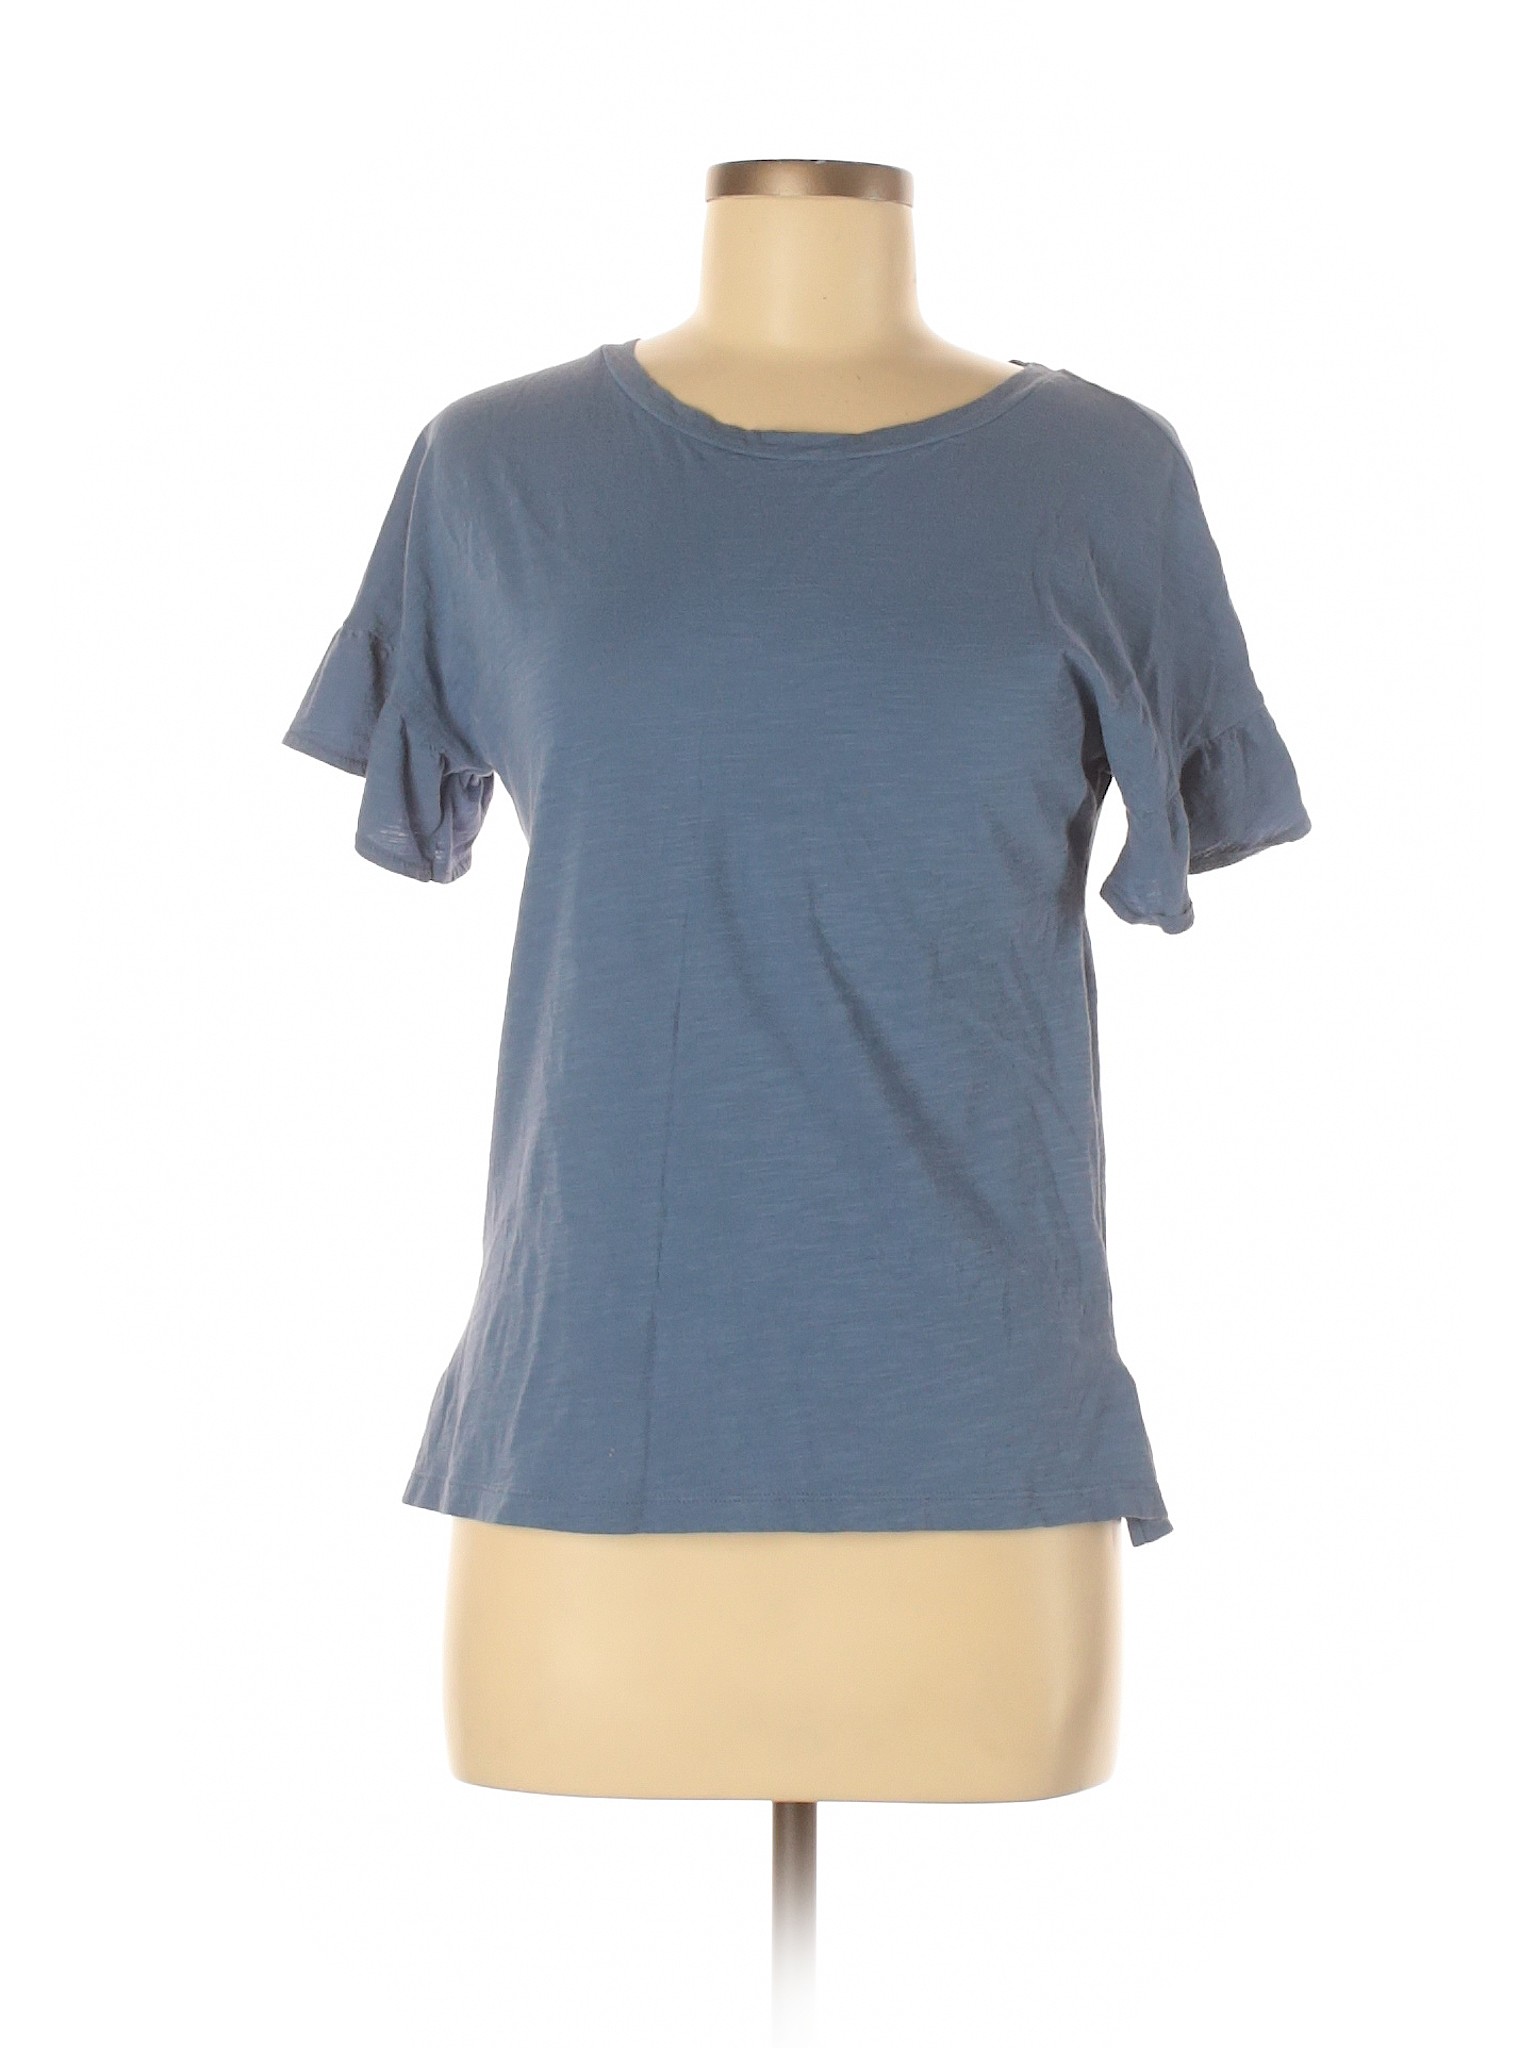 Old Navy Women Blue Short Sleeve T-Shirt S | eBay